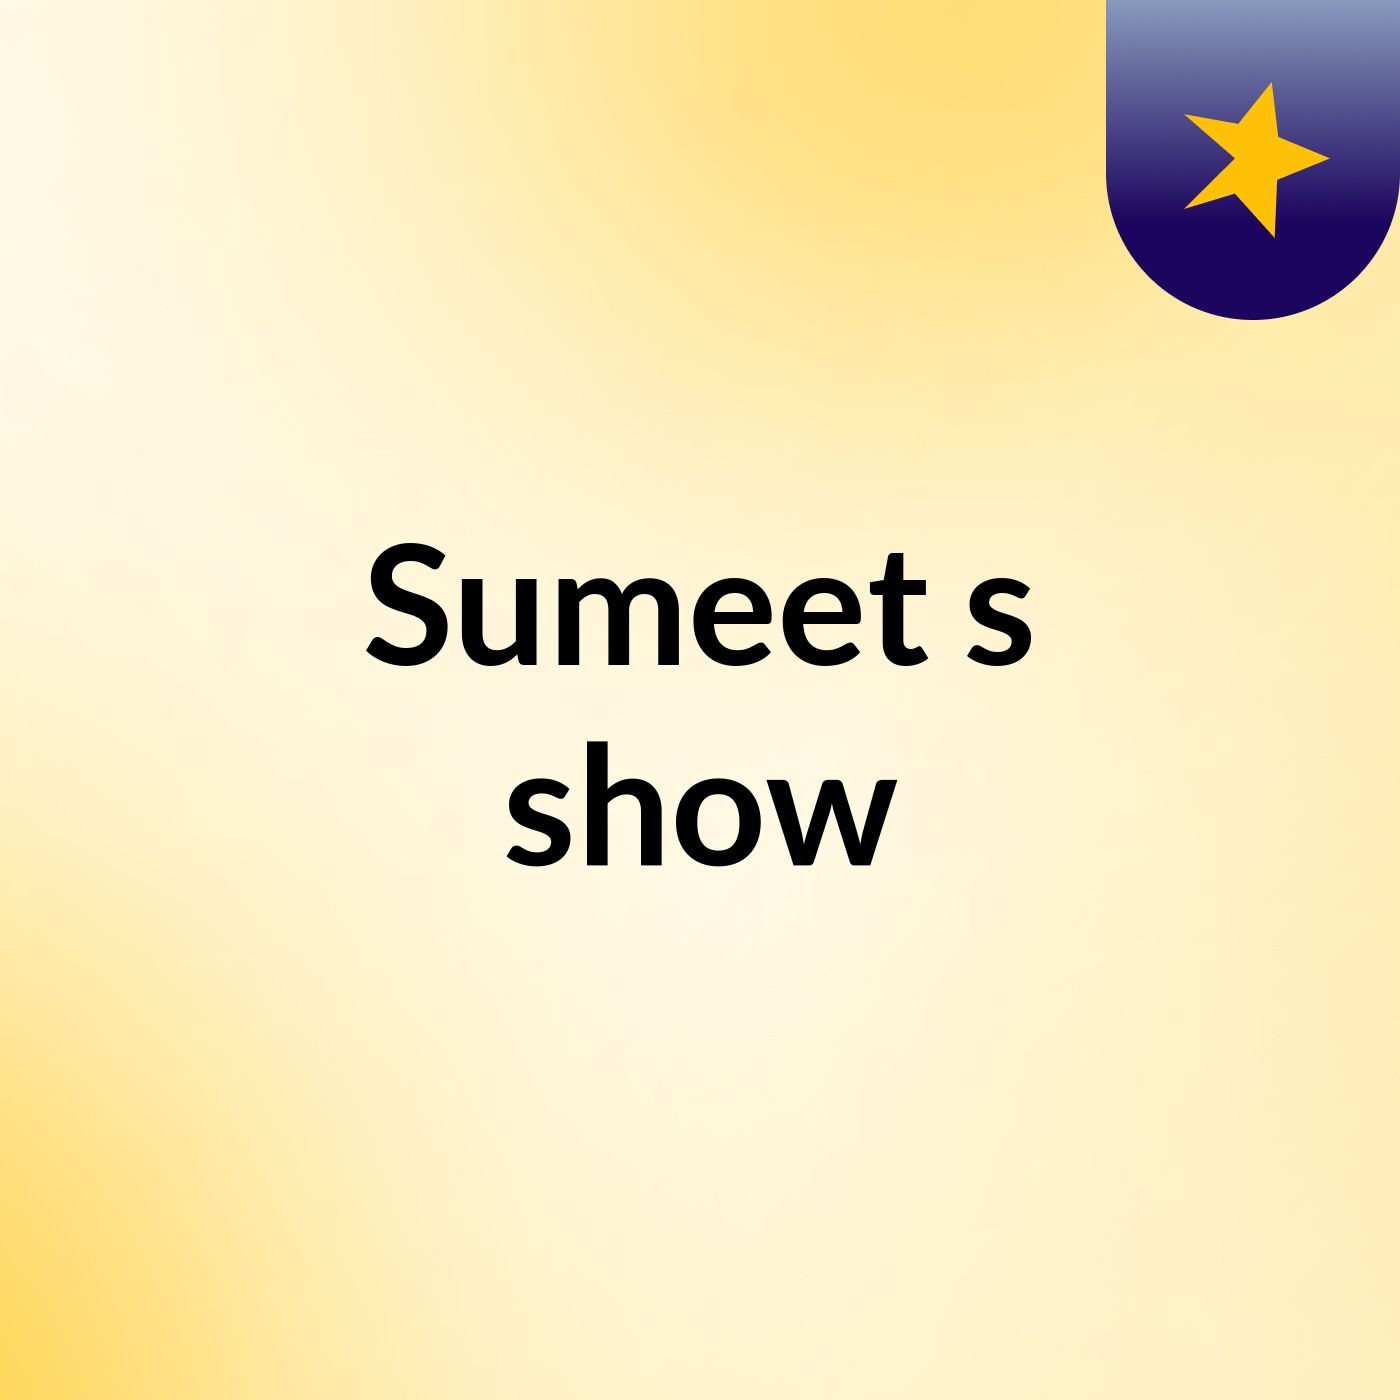 Sumeet's show